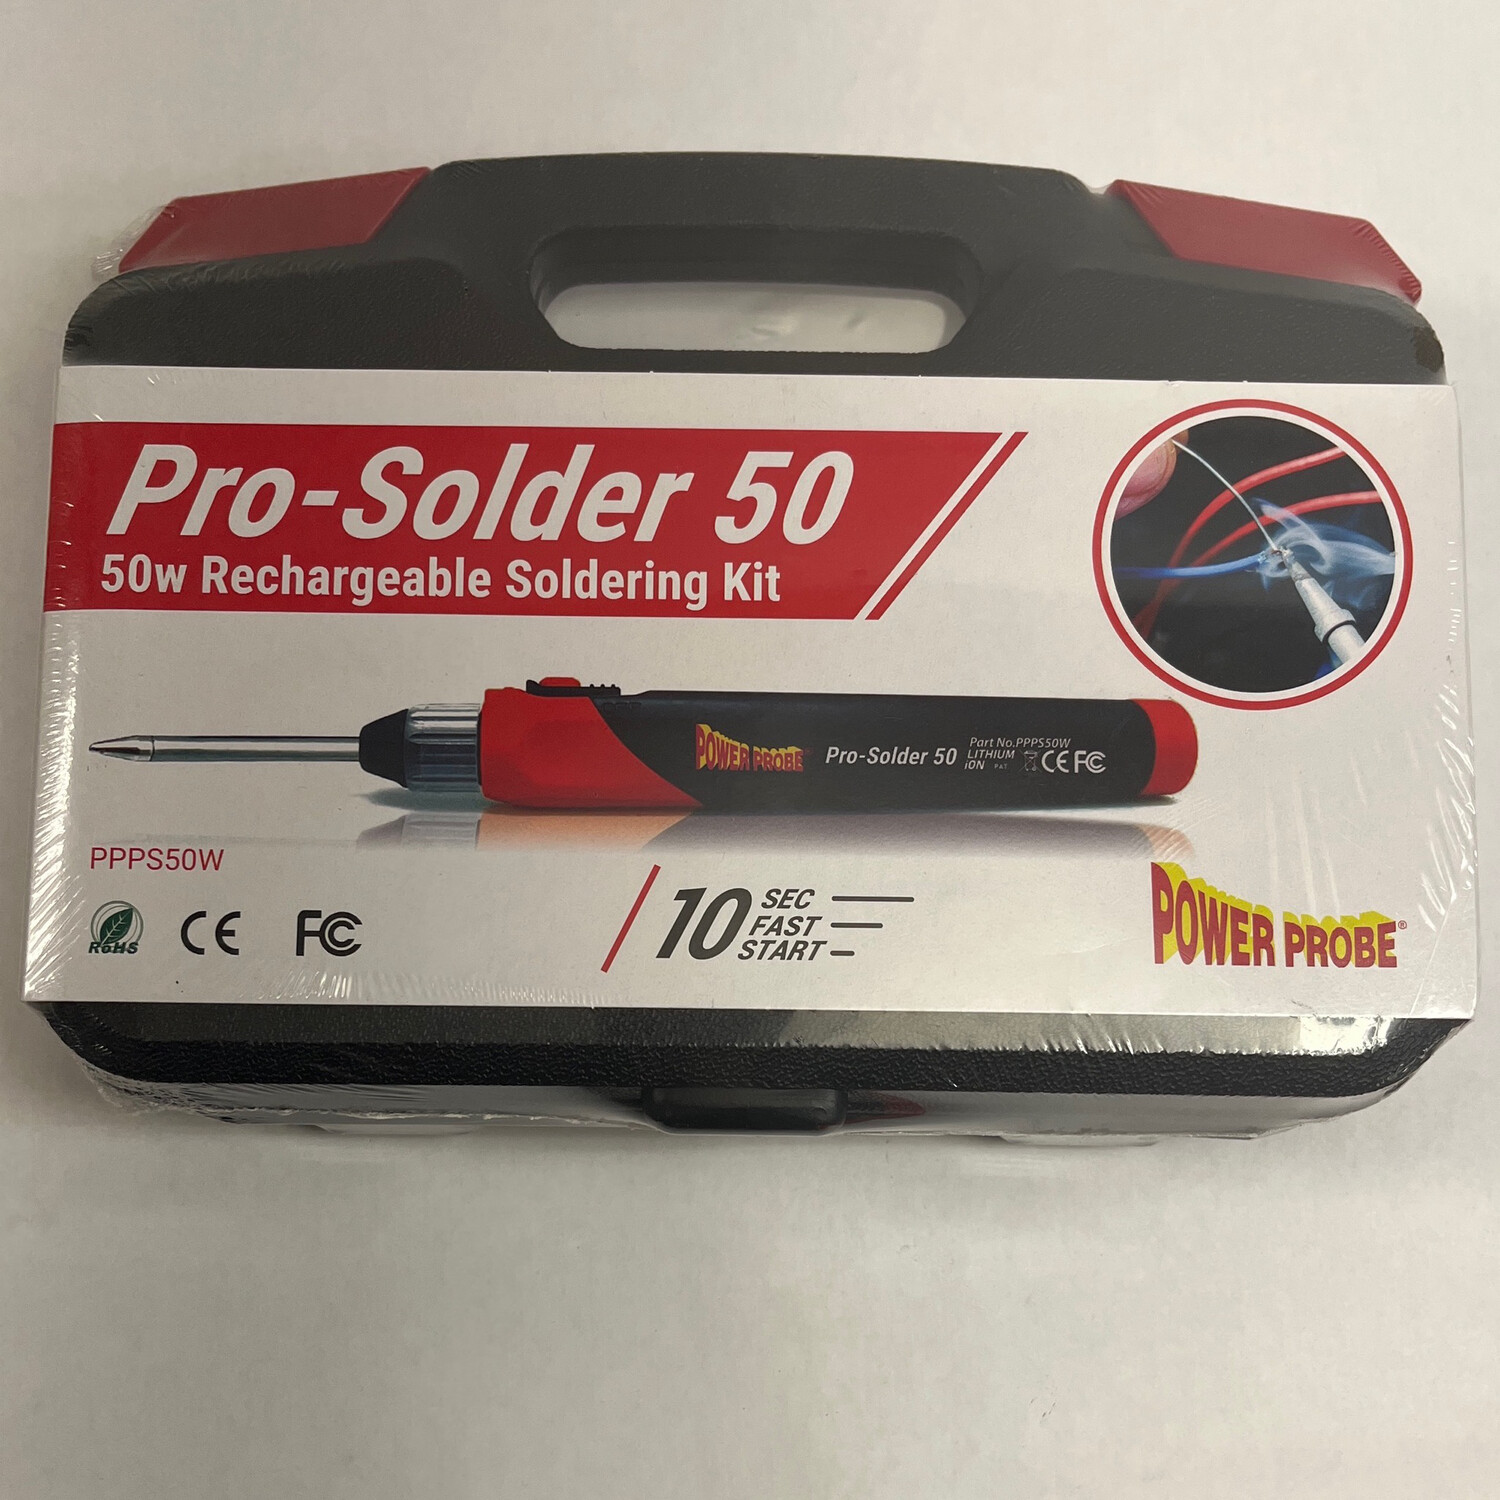 Power Probe Pro-Solder 50 Rechargeable Soldering Kit, PPPS50W